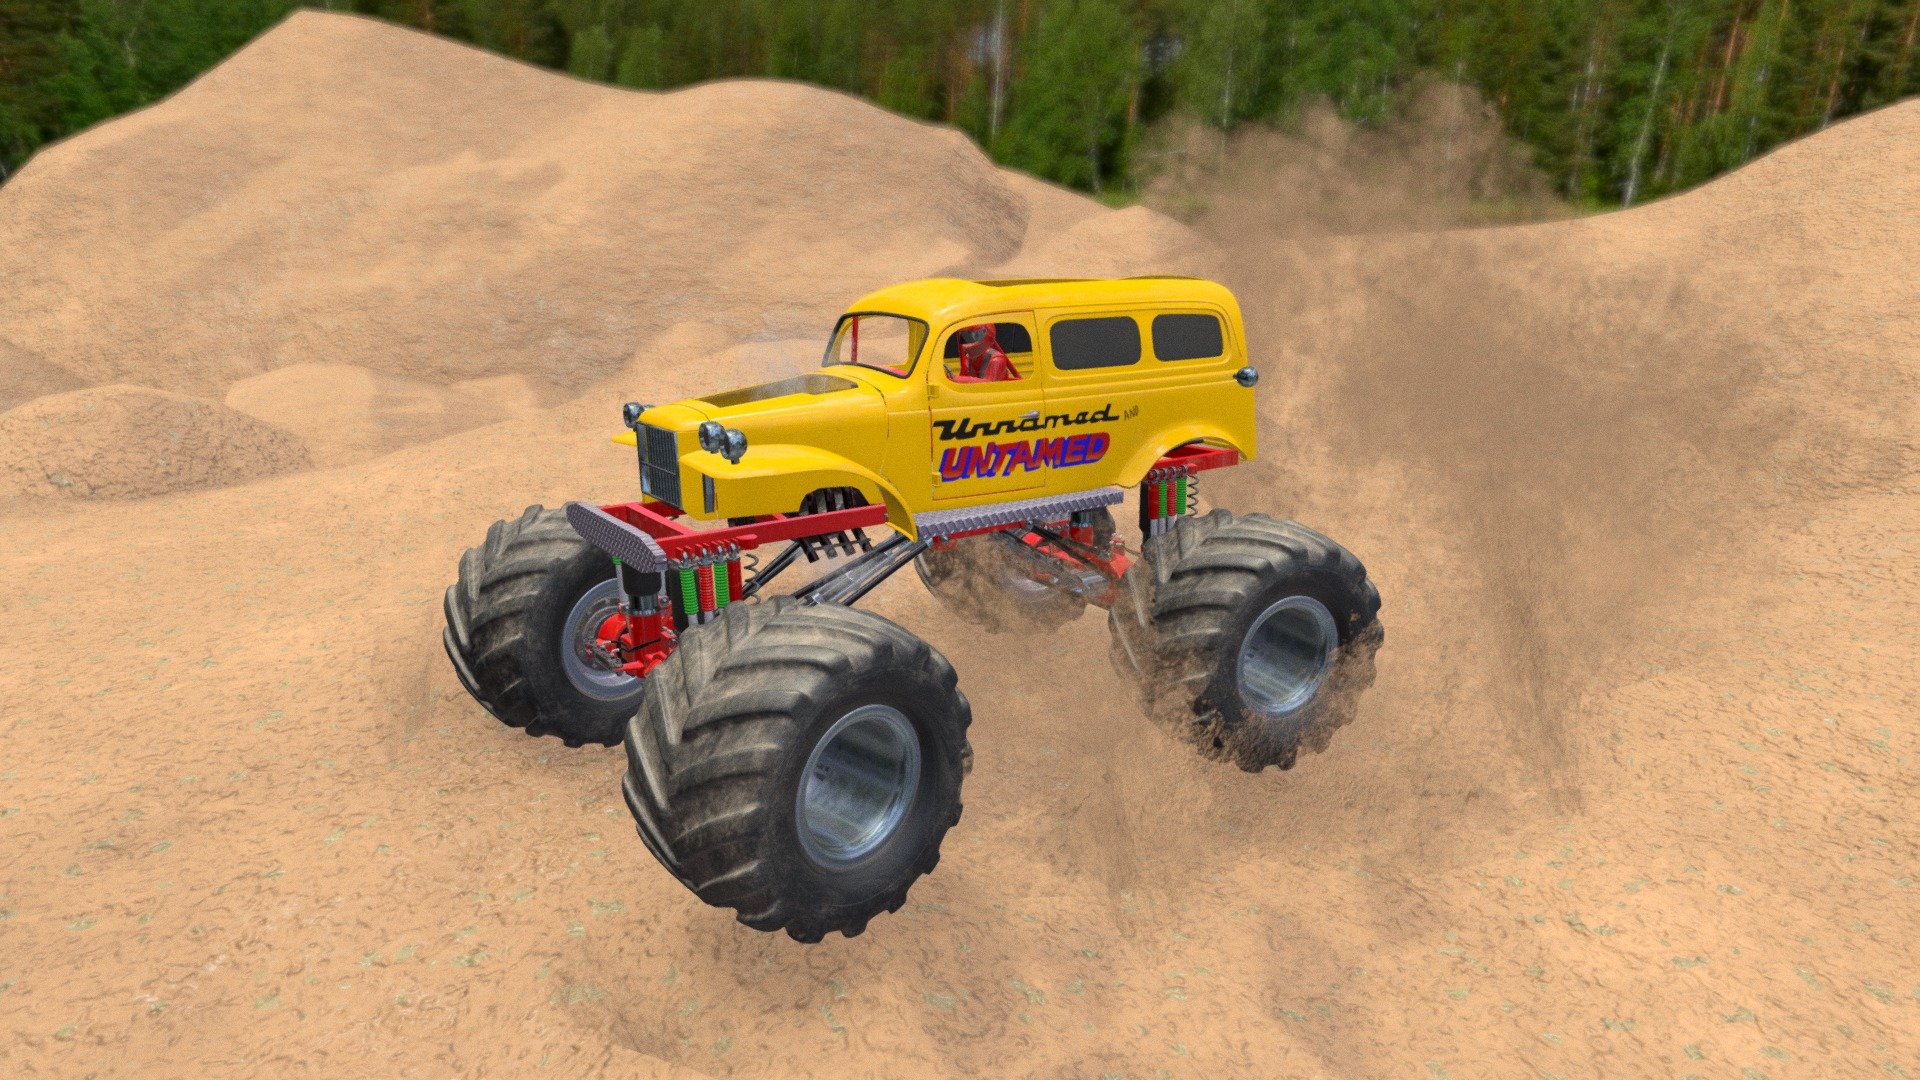 Stunt Race FX 4WD Truck render